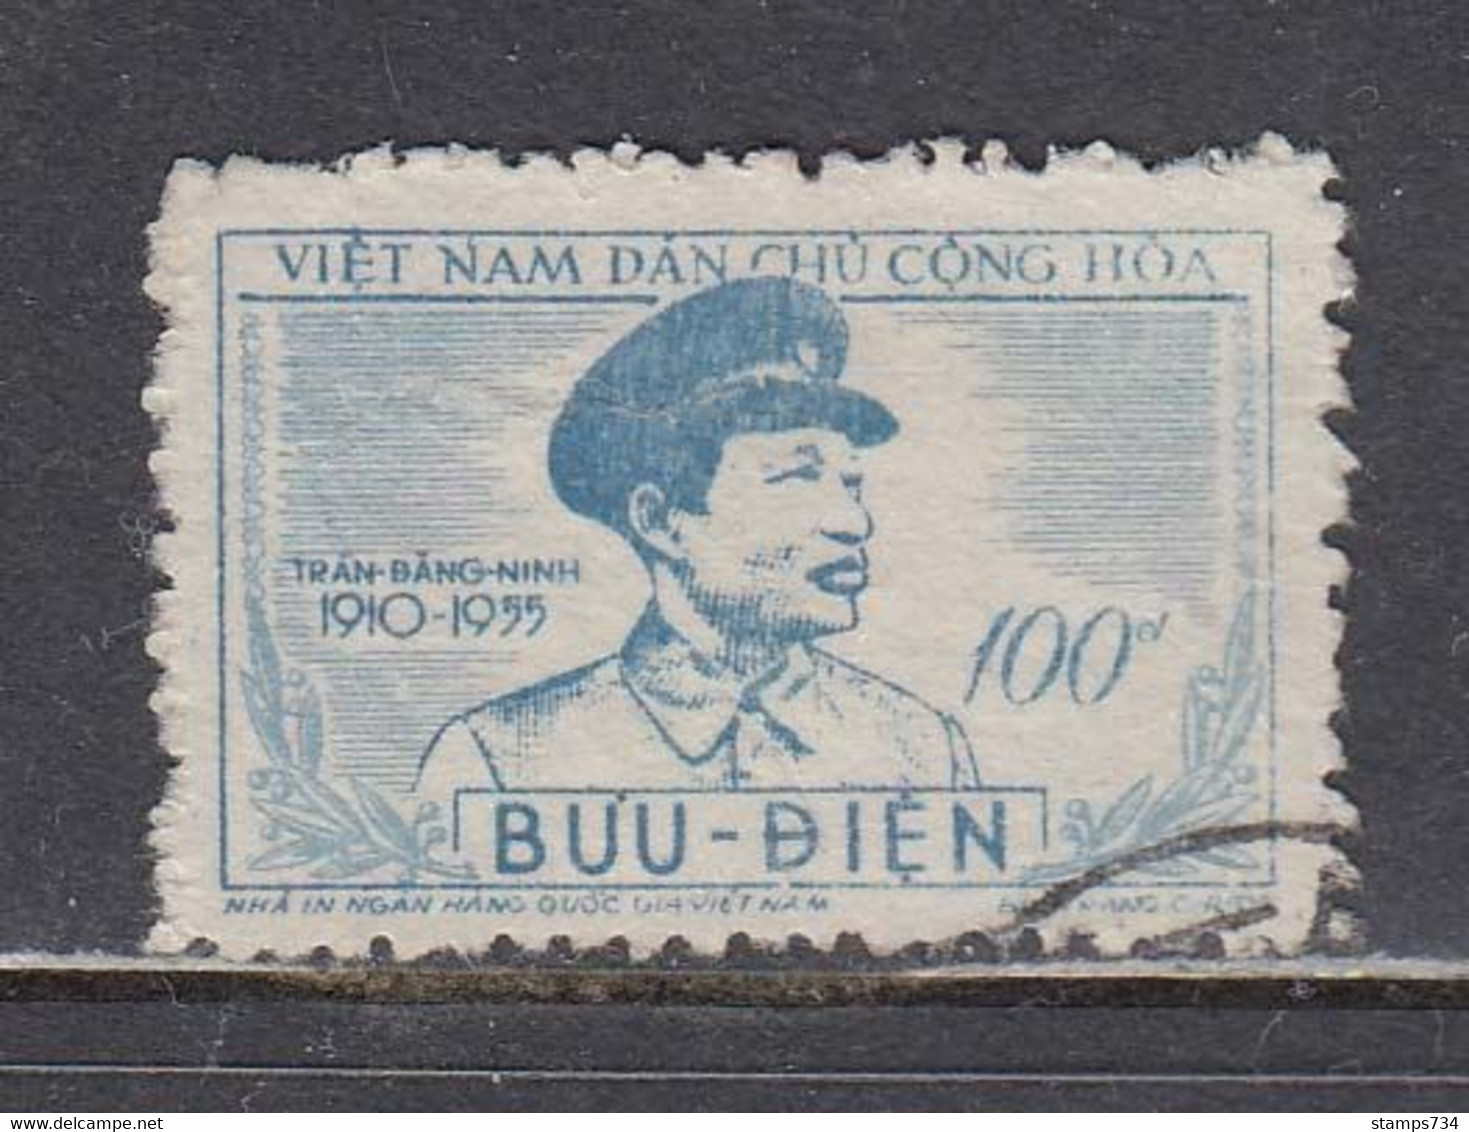 Vietnam Nord 1956 - Tran Dang Ninh, Mi-Nr. 45, Used - Vietnam